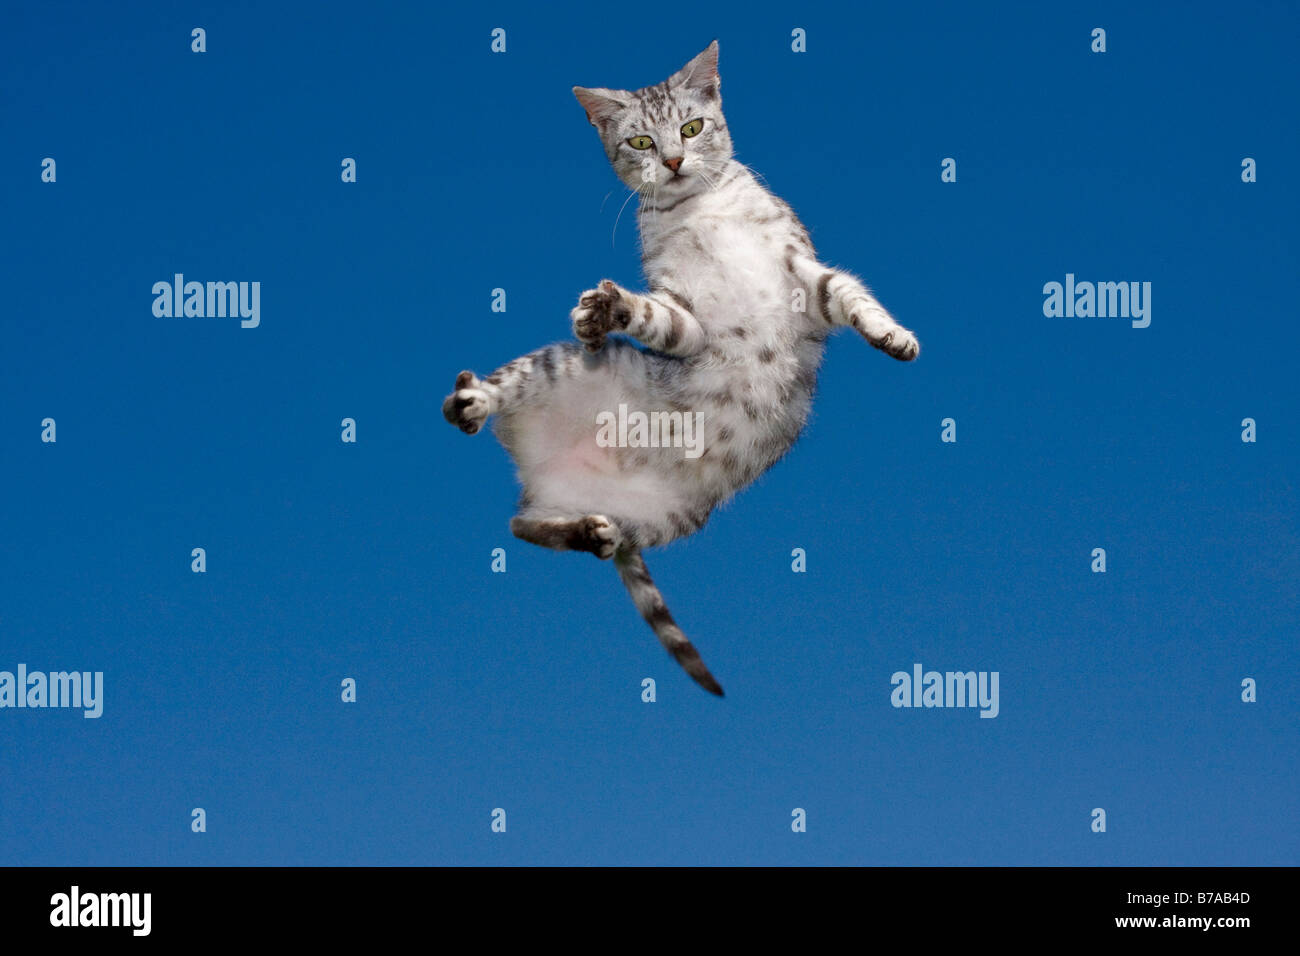 Tabby cat (Felis catus) in the air Stock Photo